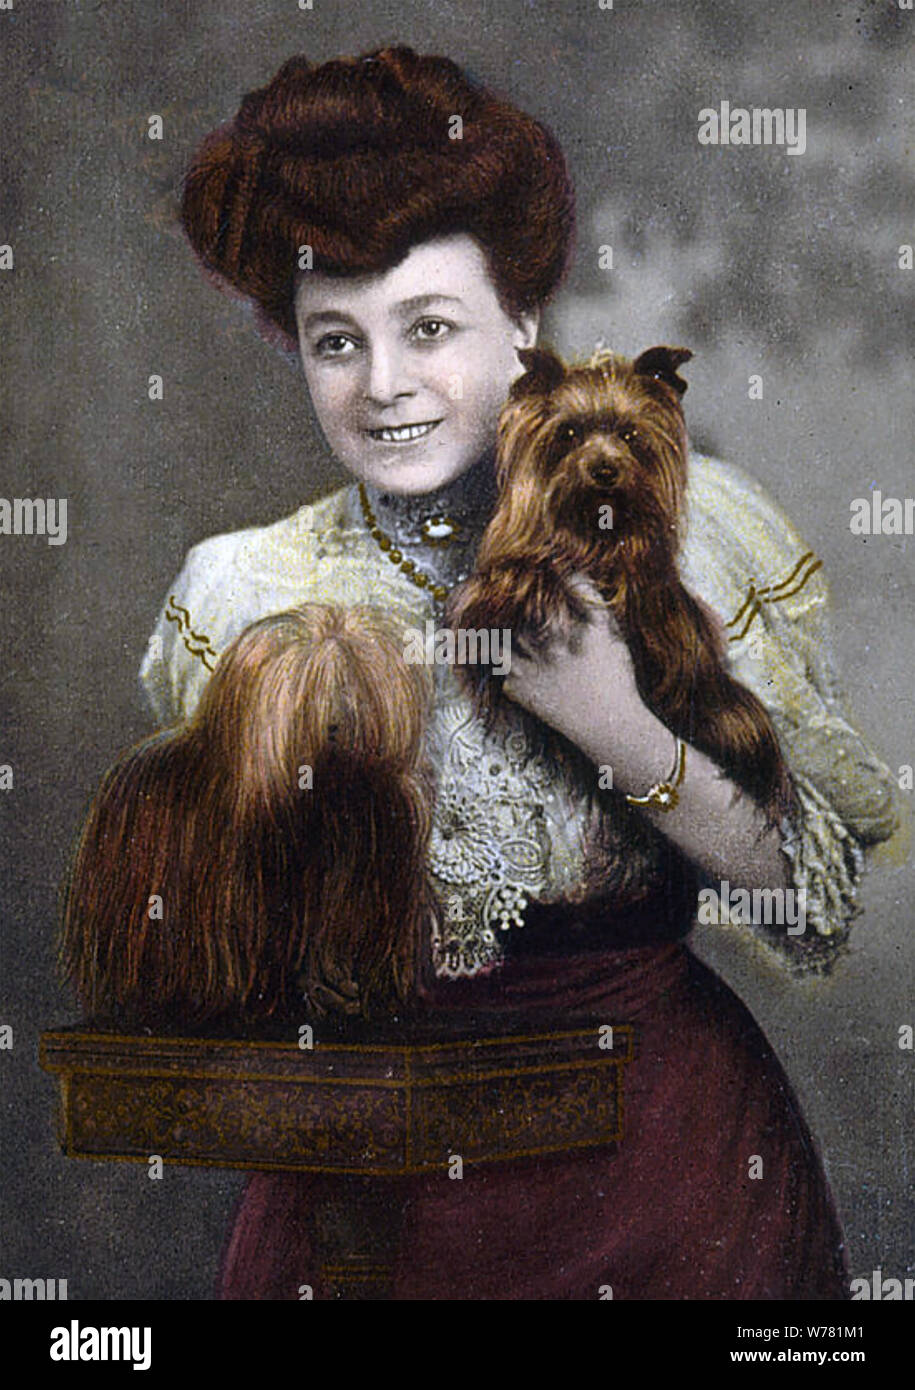 VESTA TILLEY (1864-1952) stage name of English music hall performer Matilda Powles Stock Photo